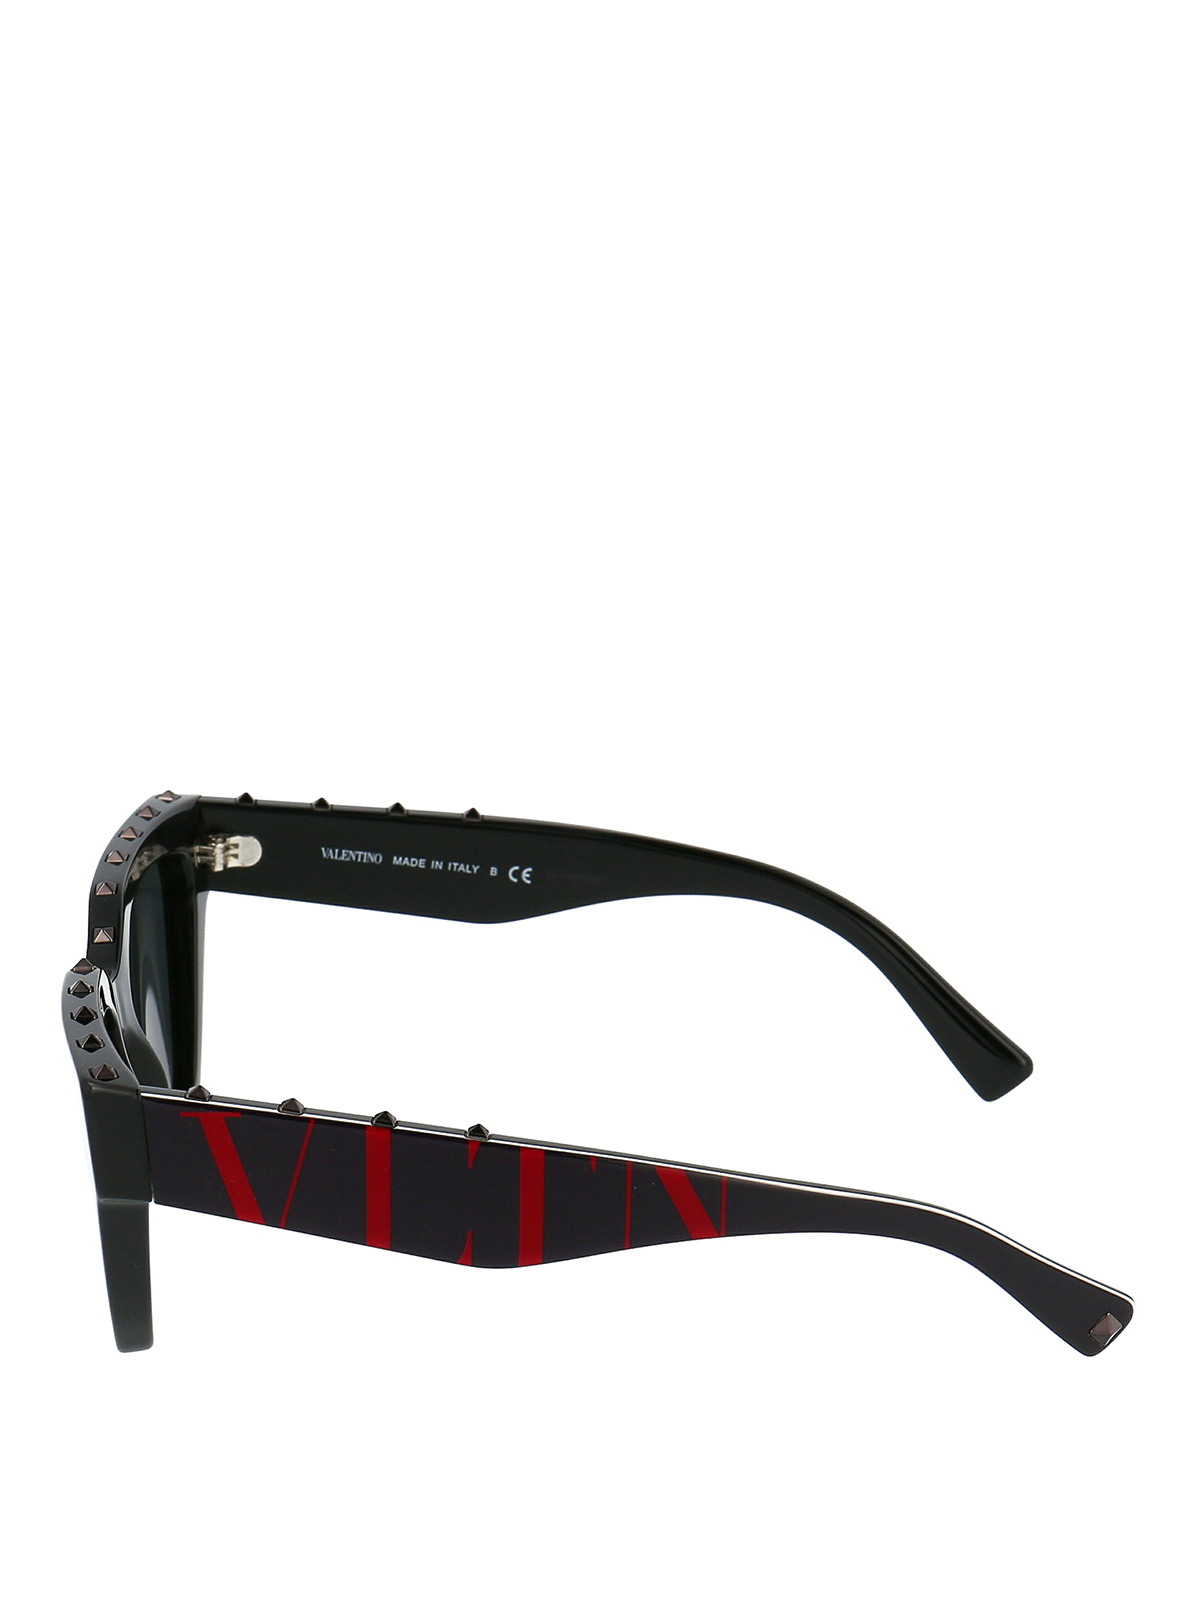 Valentino Garavani Studded cat eye sunglasses - 0VA404651428753514287